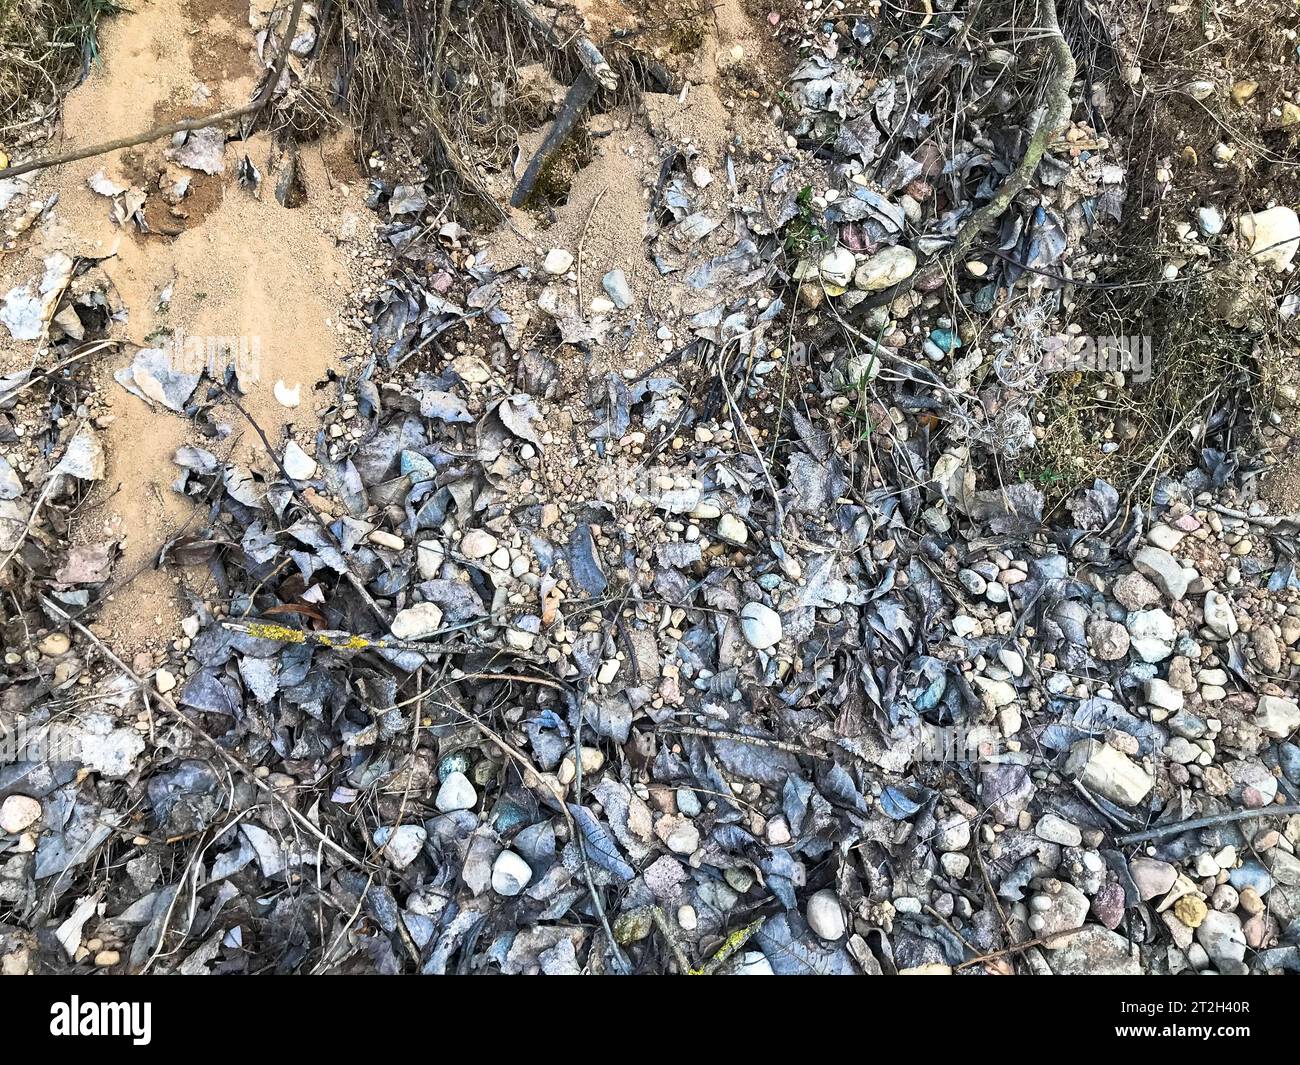 Flat Rocks, Sticks, Twigs and Stones Stock Image - Image of pattern,  outside: 116499827